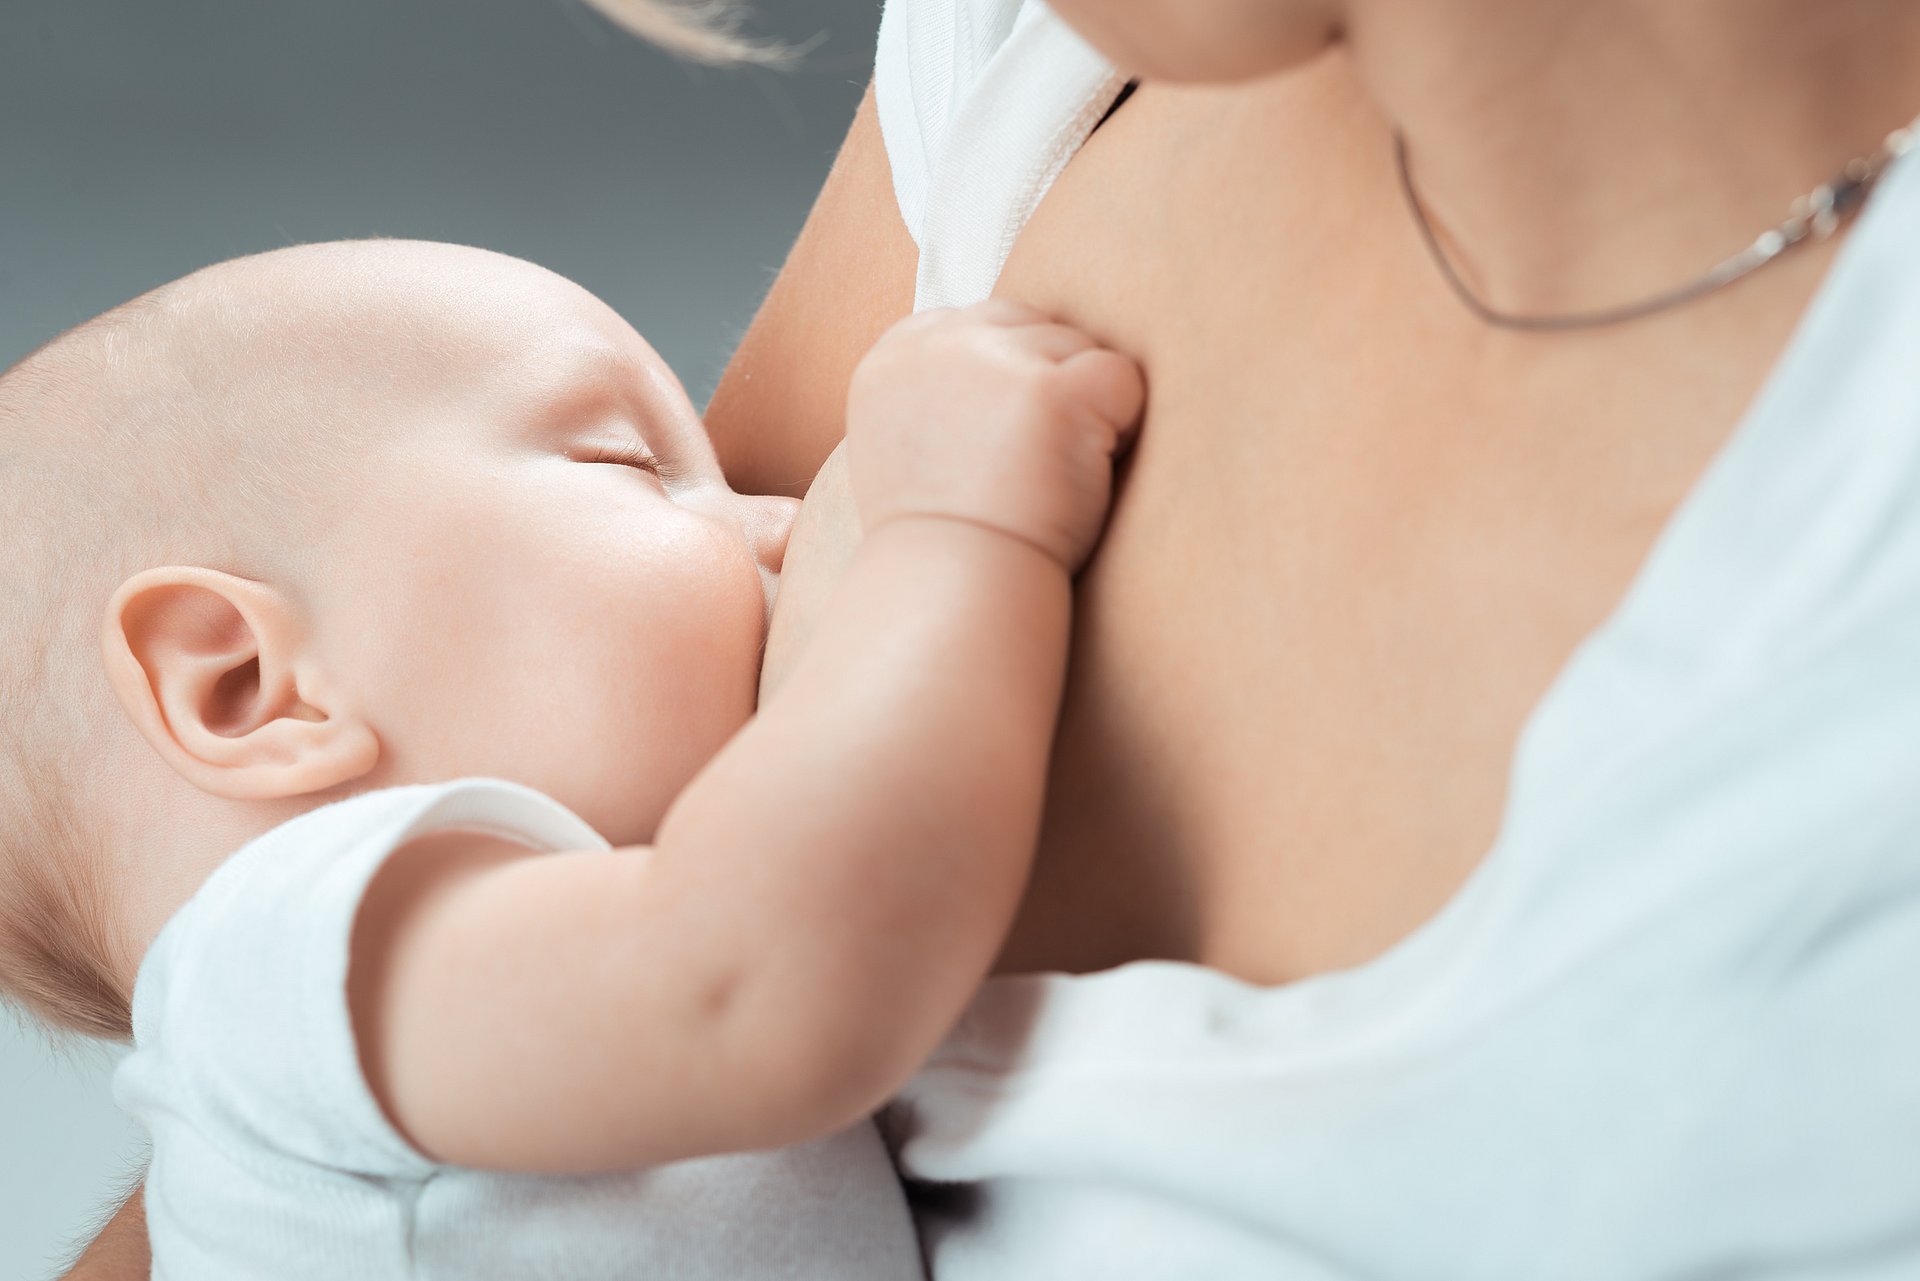 A Mother breastfeeding. (photo: Dmytro Vietrov / Fotolia)